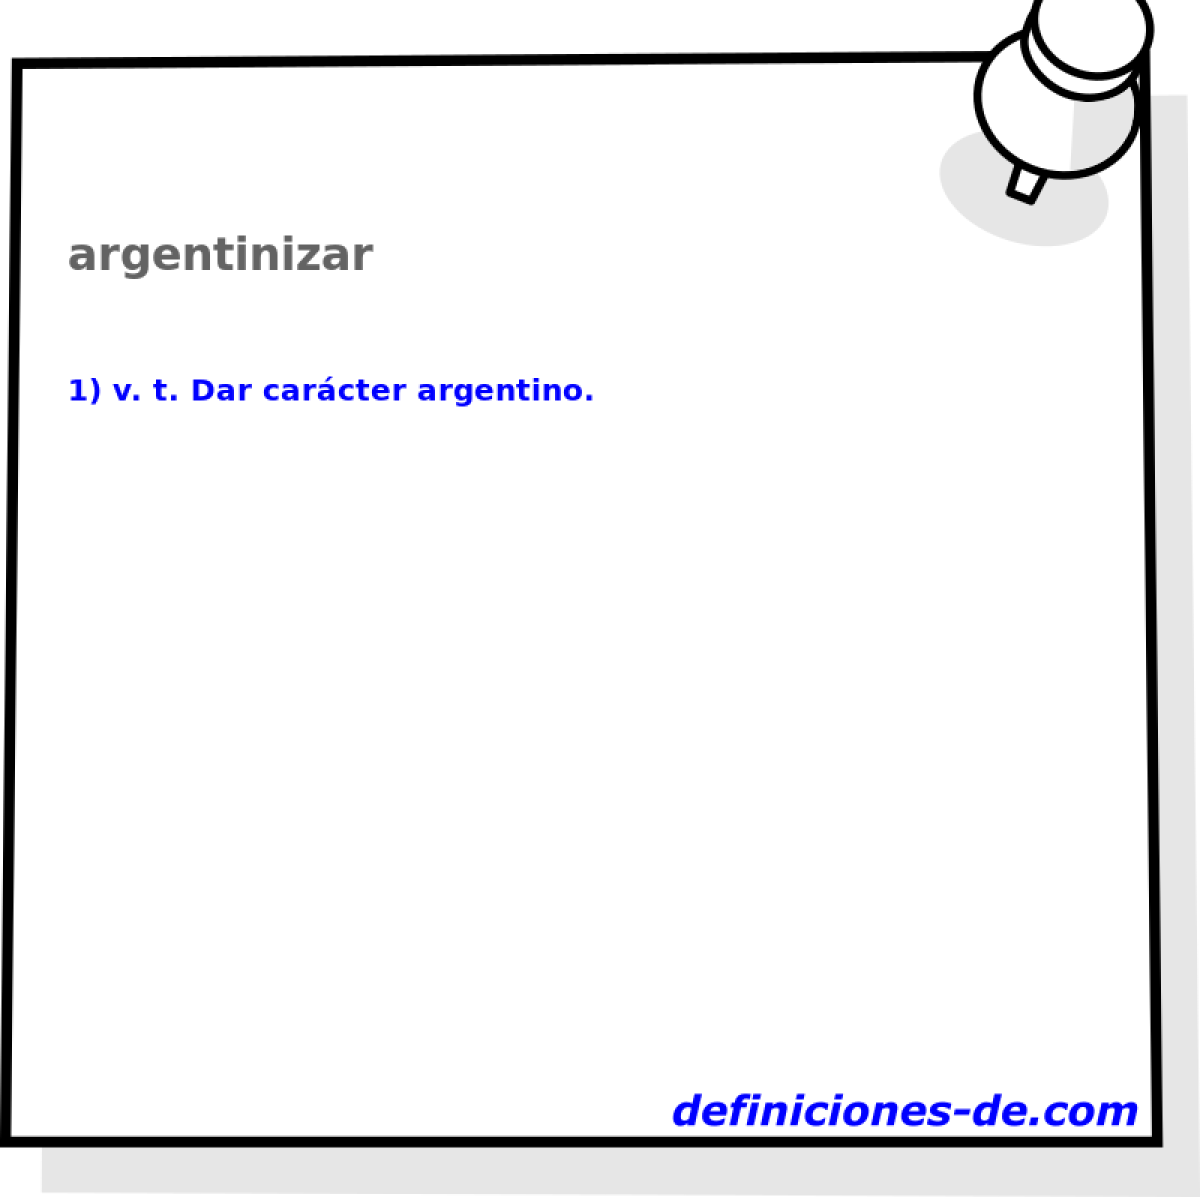 argentinizar 